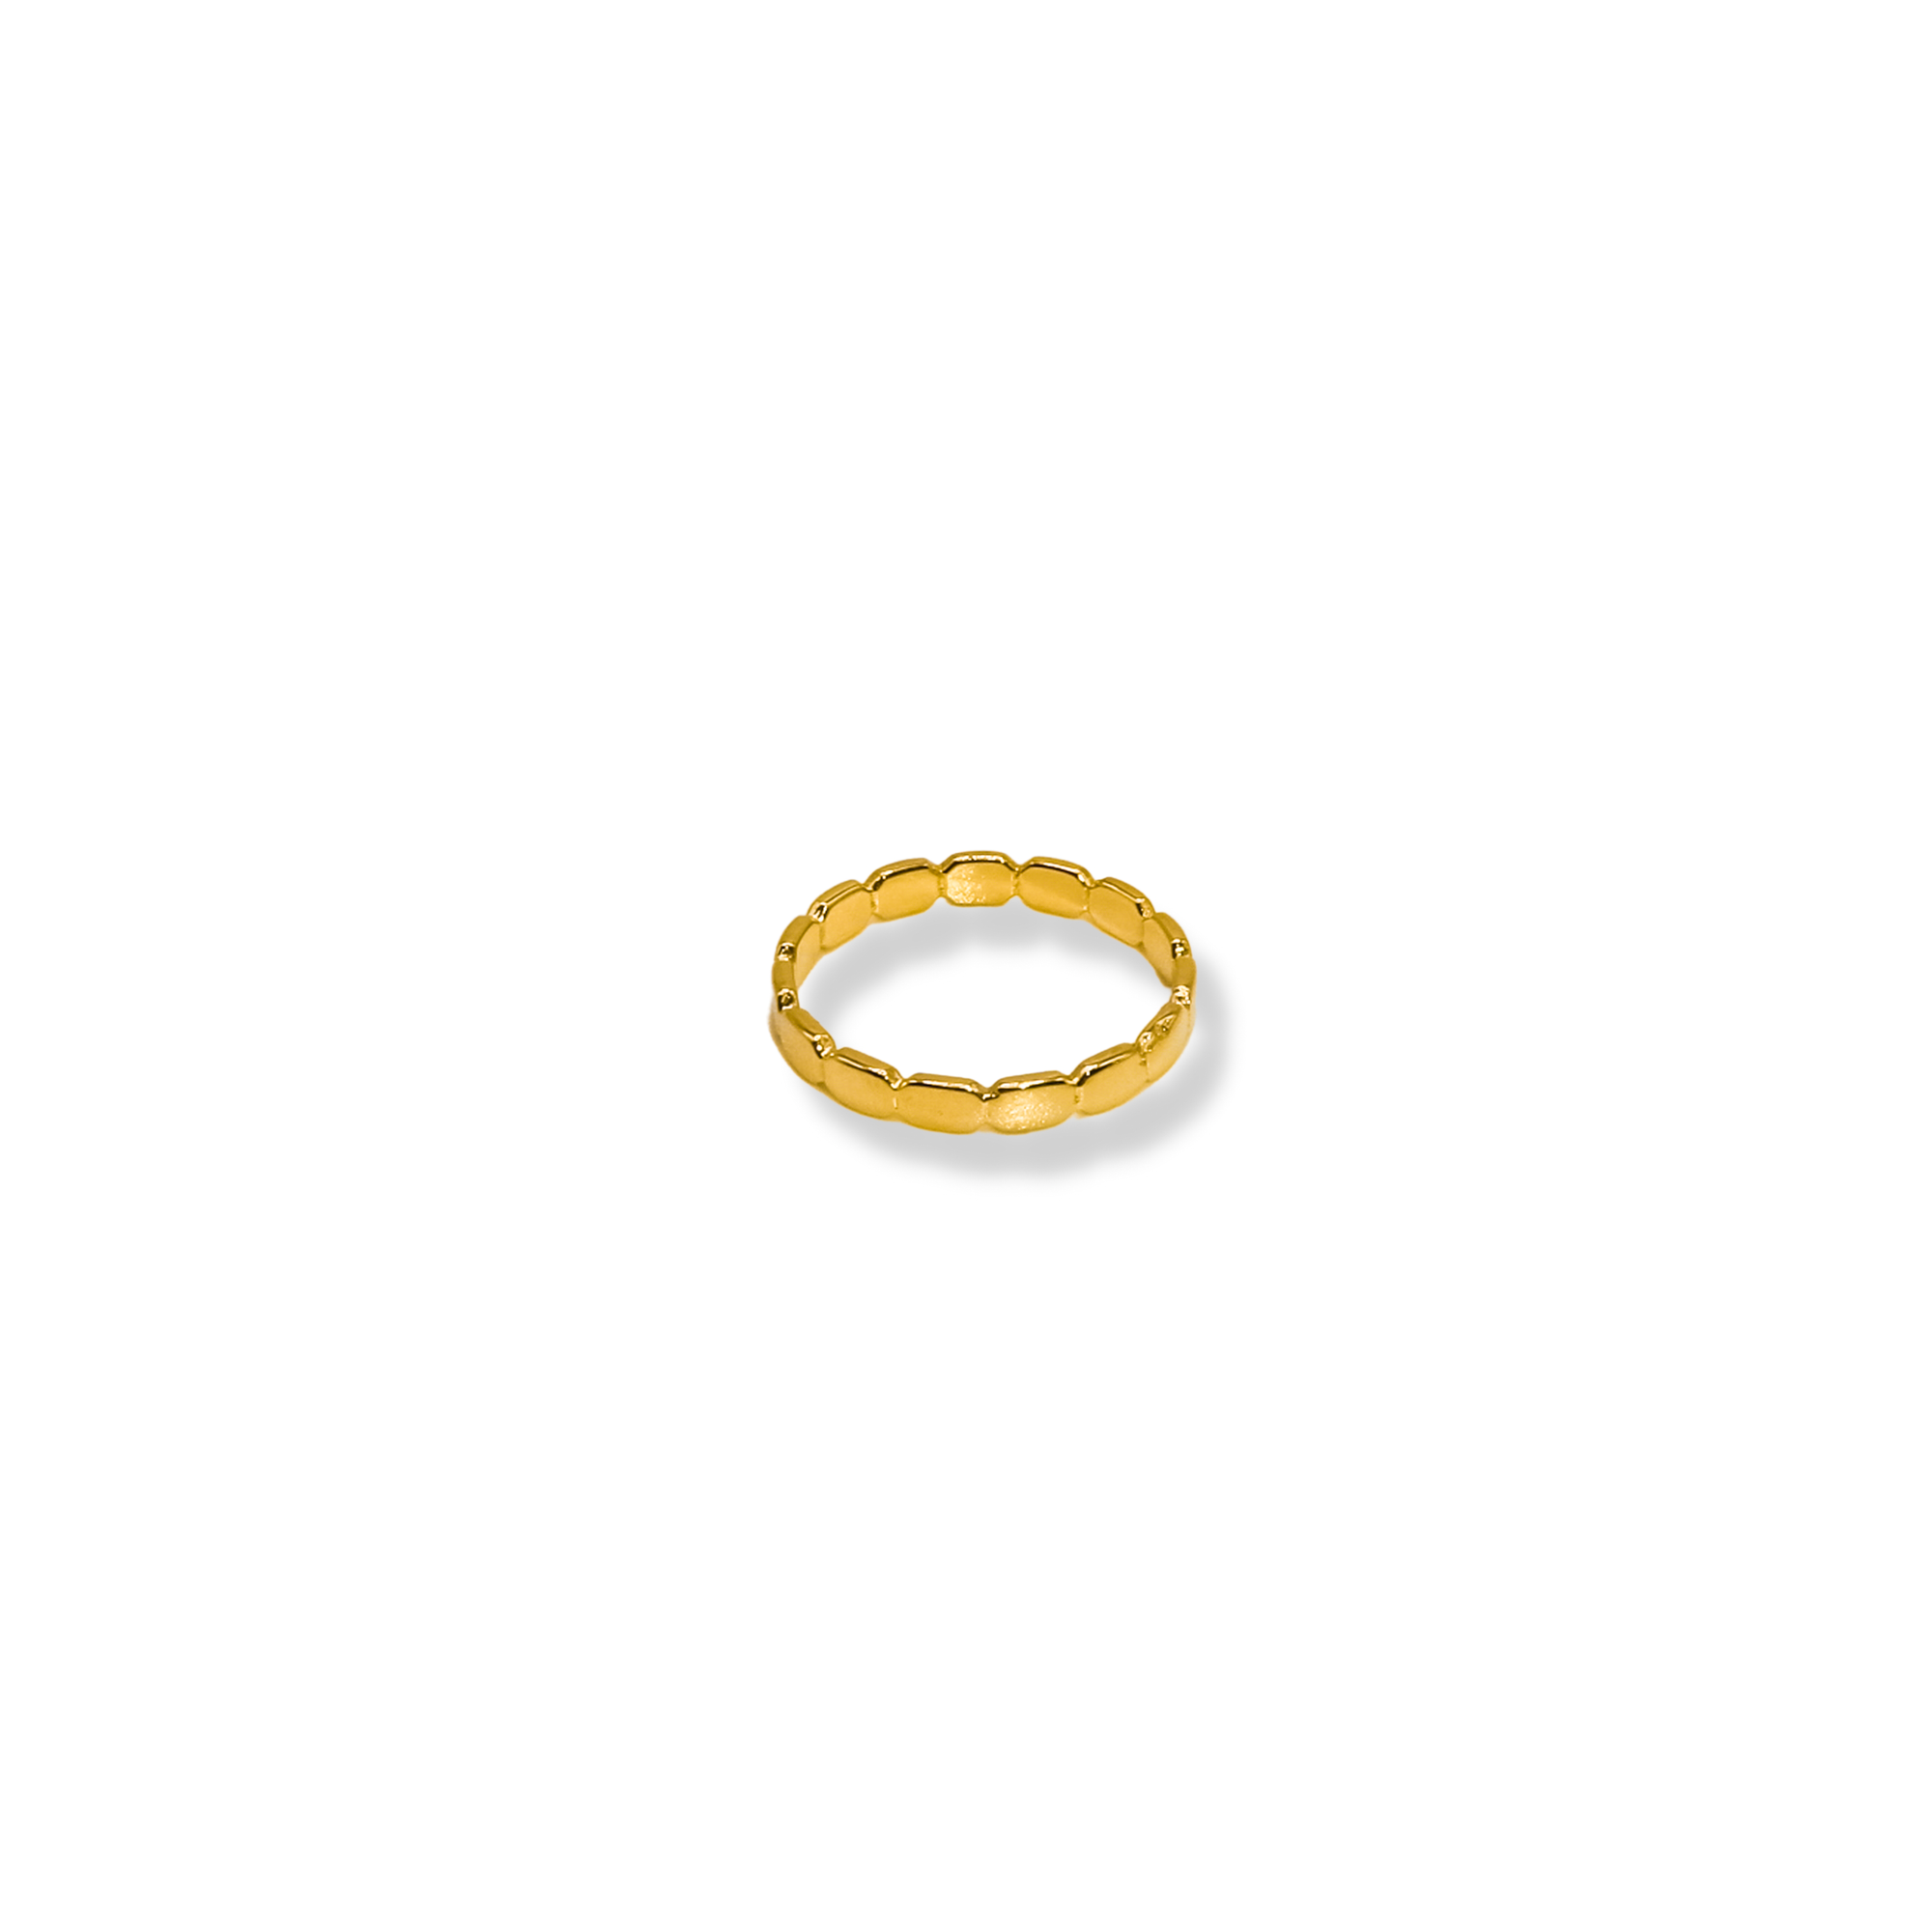 Vintage Inspired Gold Ring